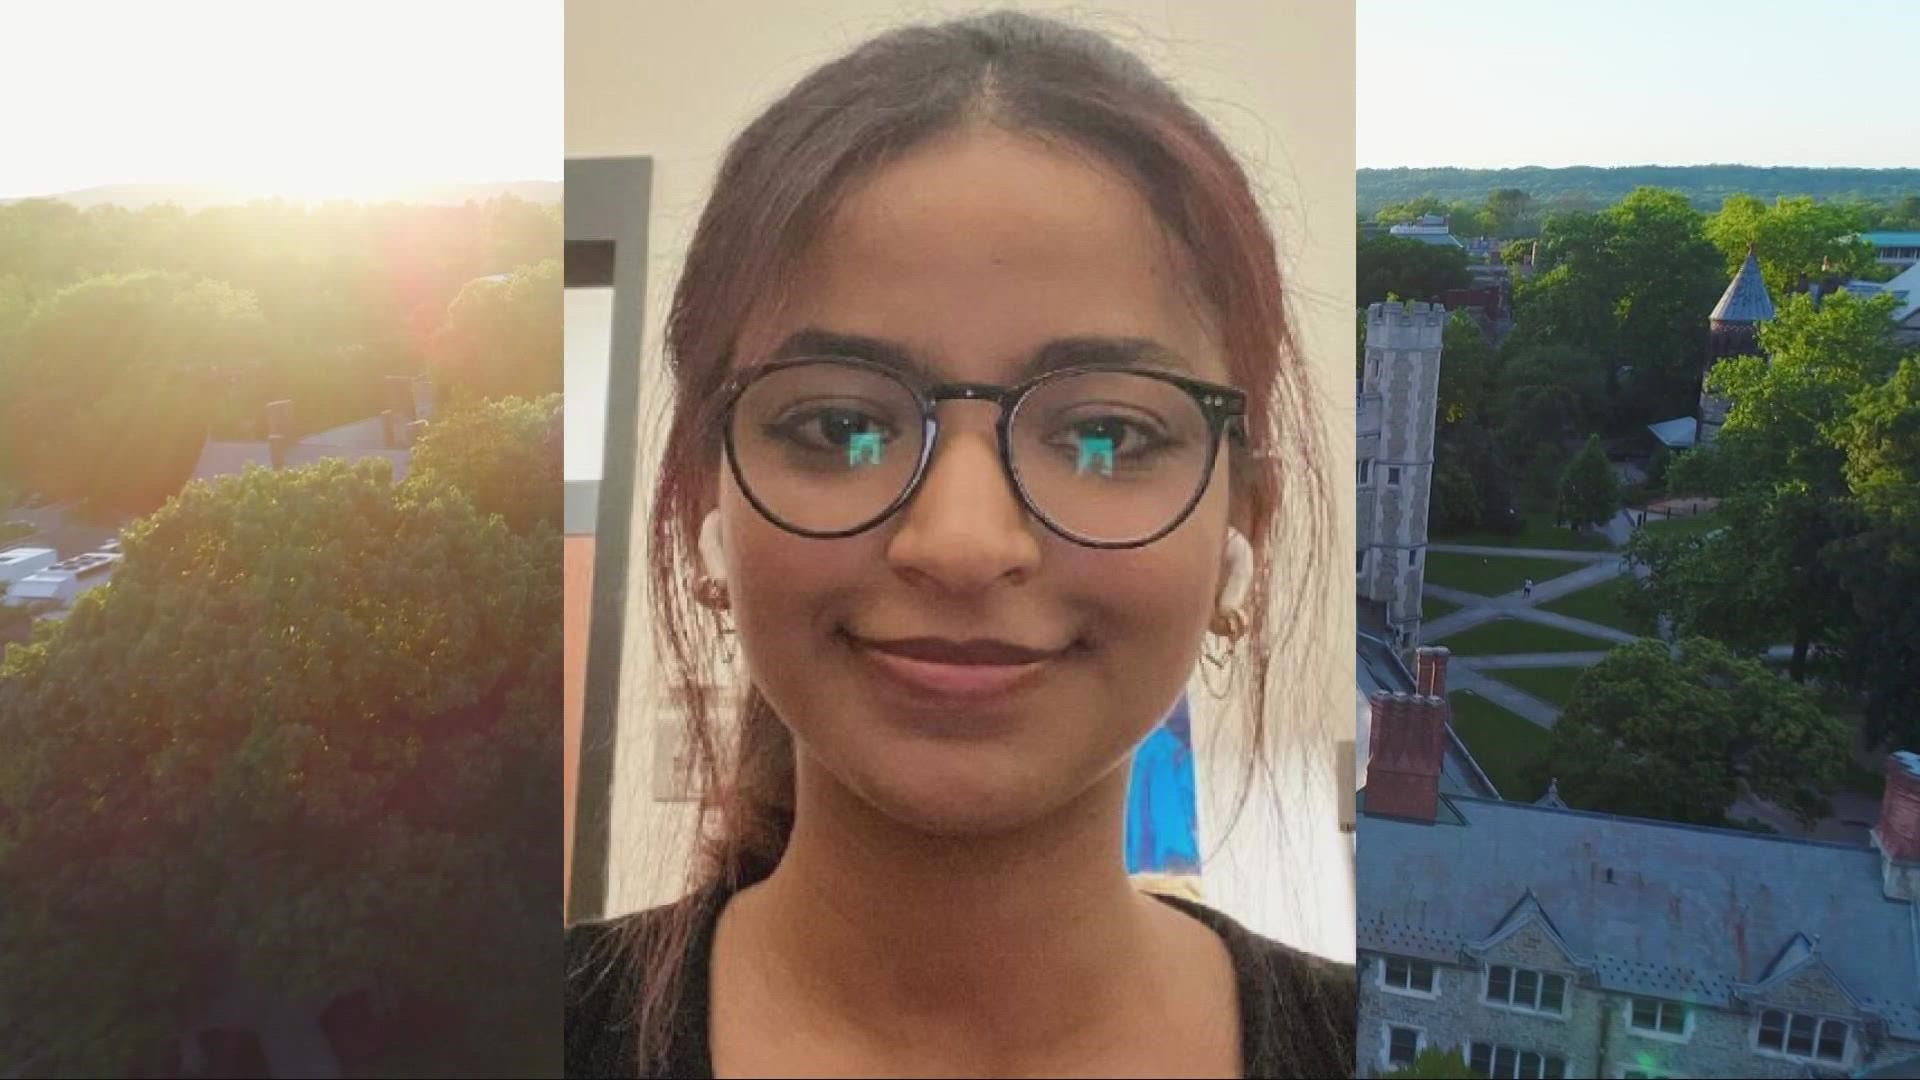 Misrach Ewunetie was last seen on Friday, October 14 at around 3 a.m. near her dorm.